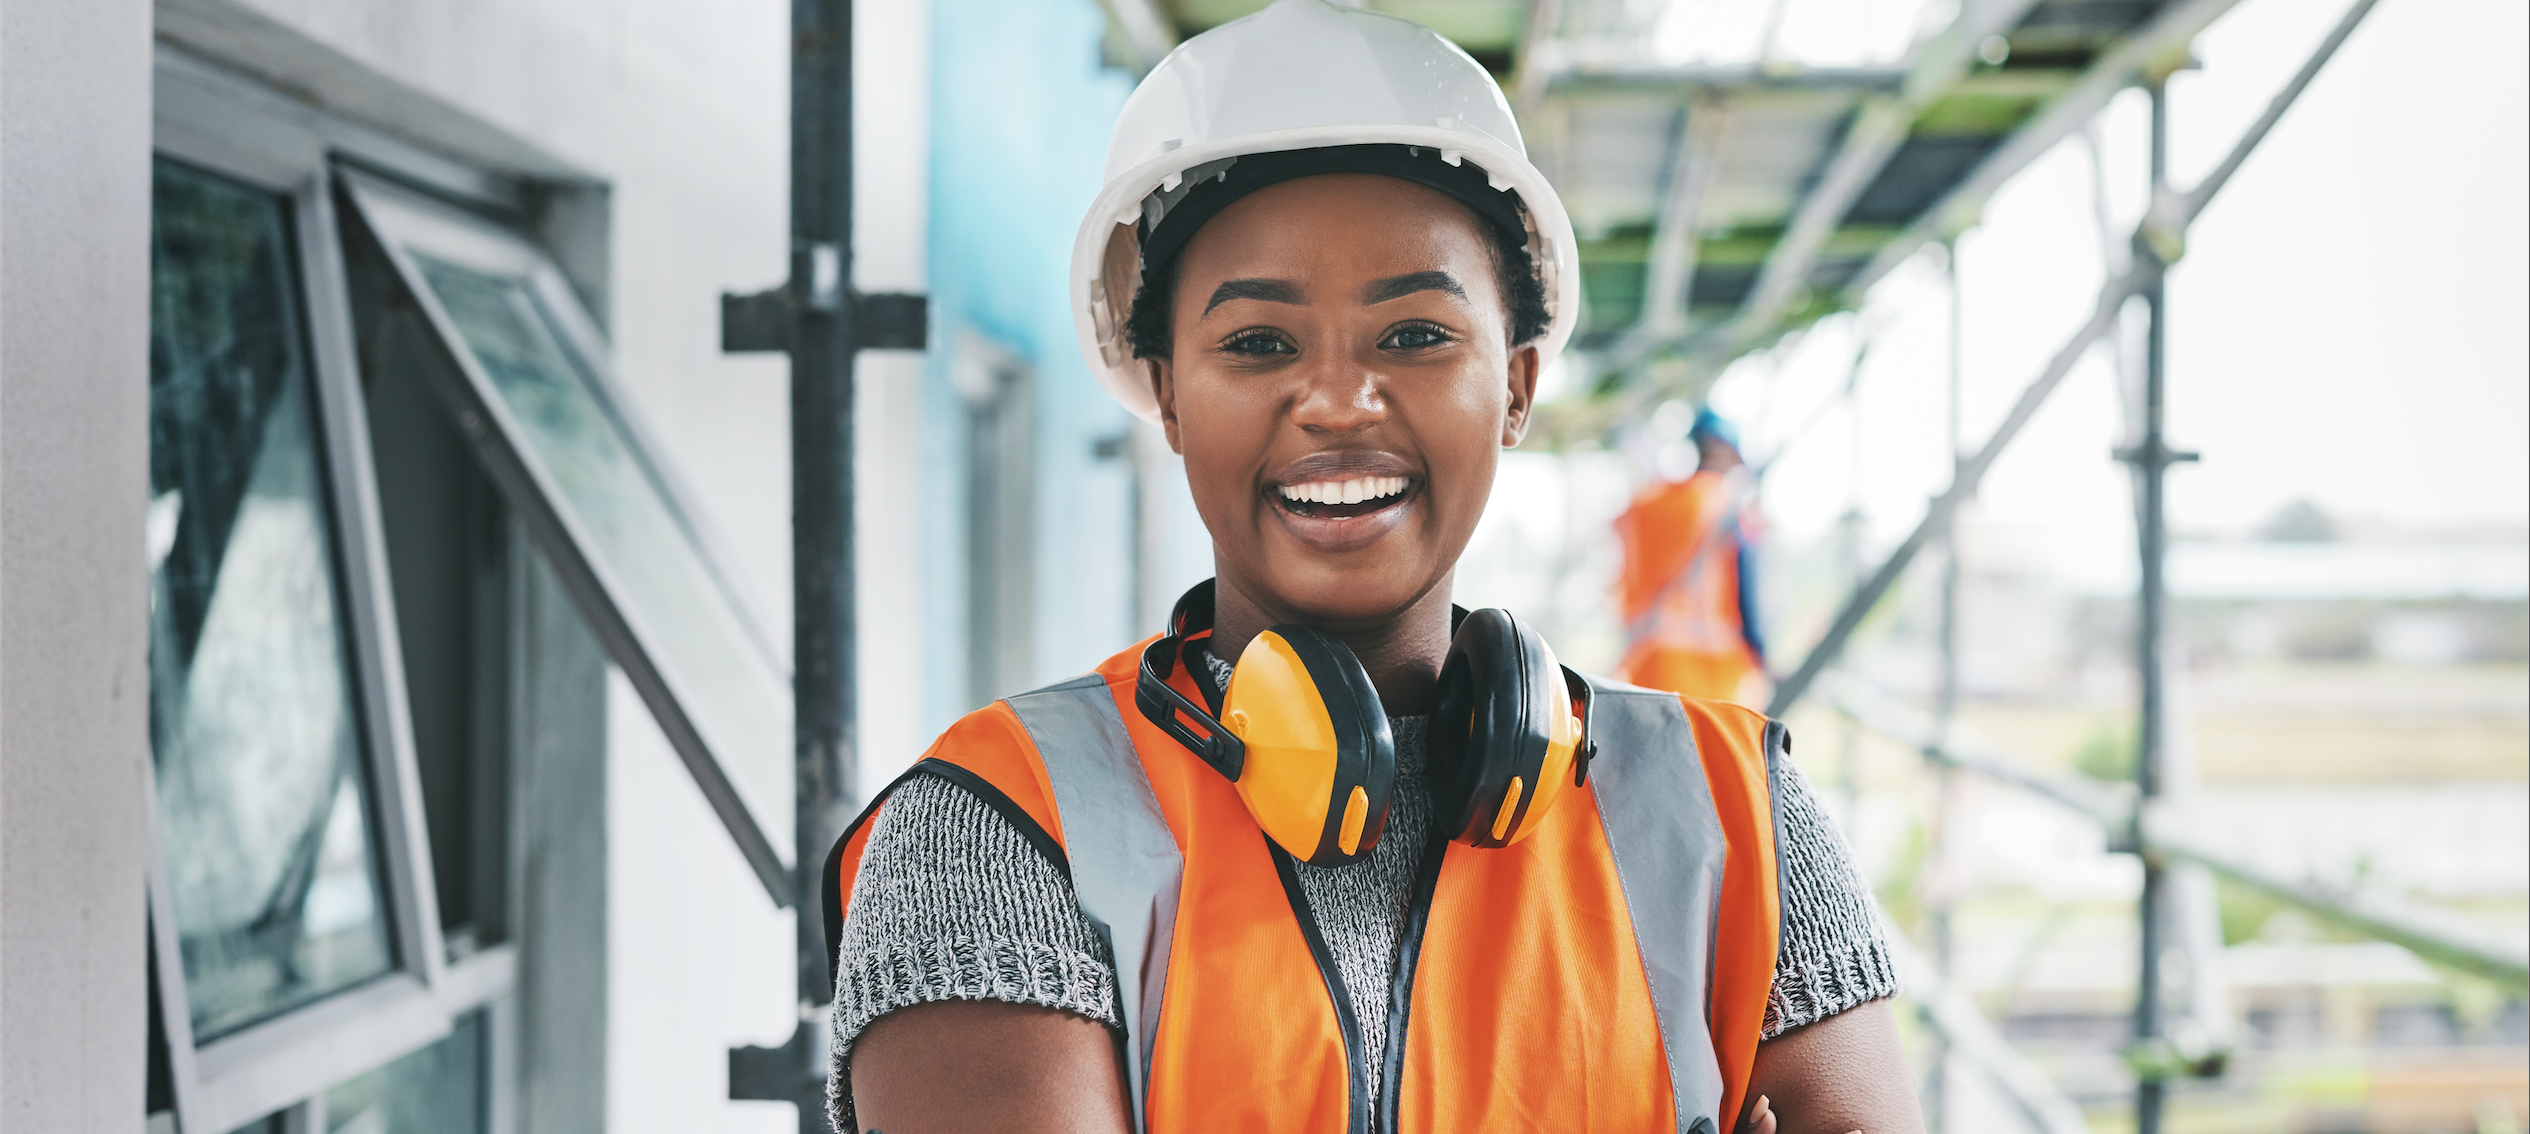 Women's PPE Vests | WRYKER Construction Supply